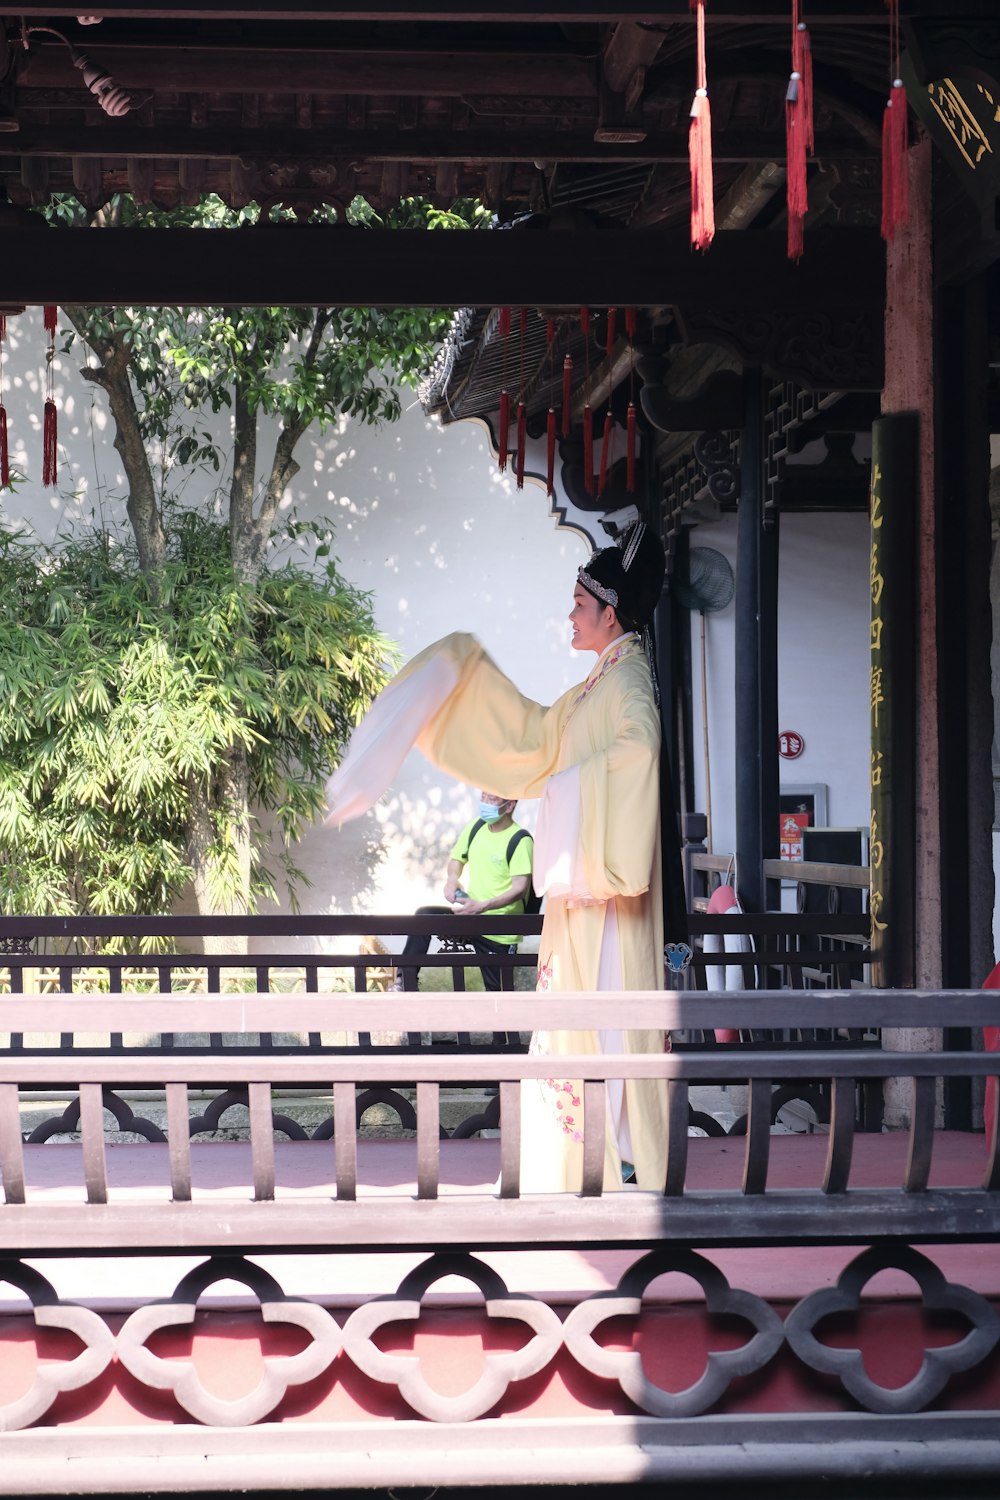 Un hombre vestido con ropa tradicional china sosteniendo una sombrilla